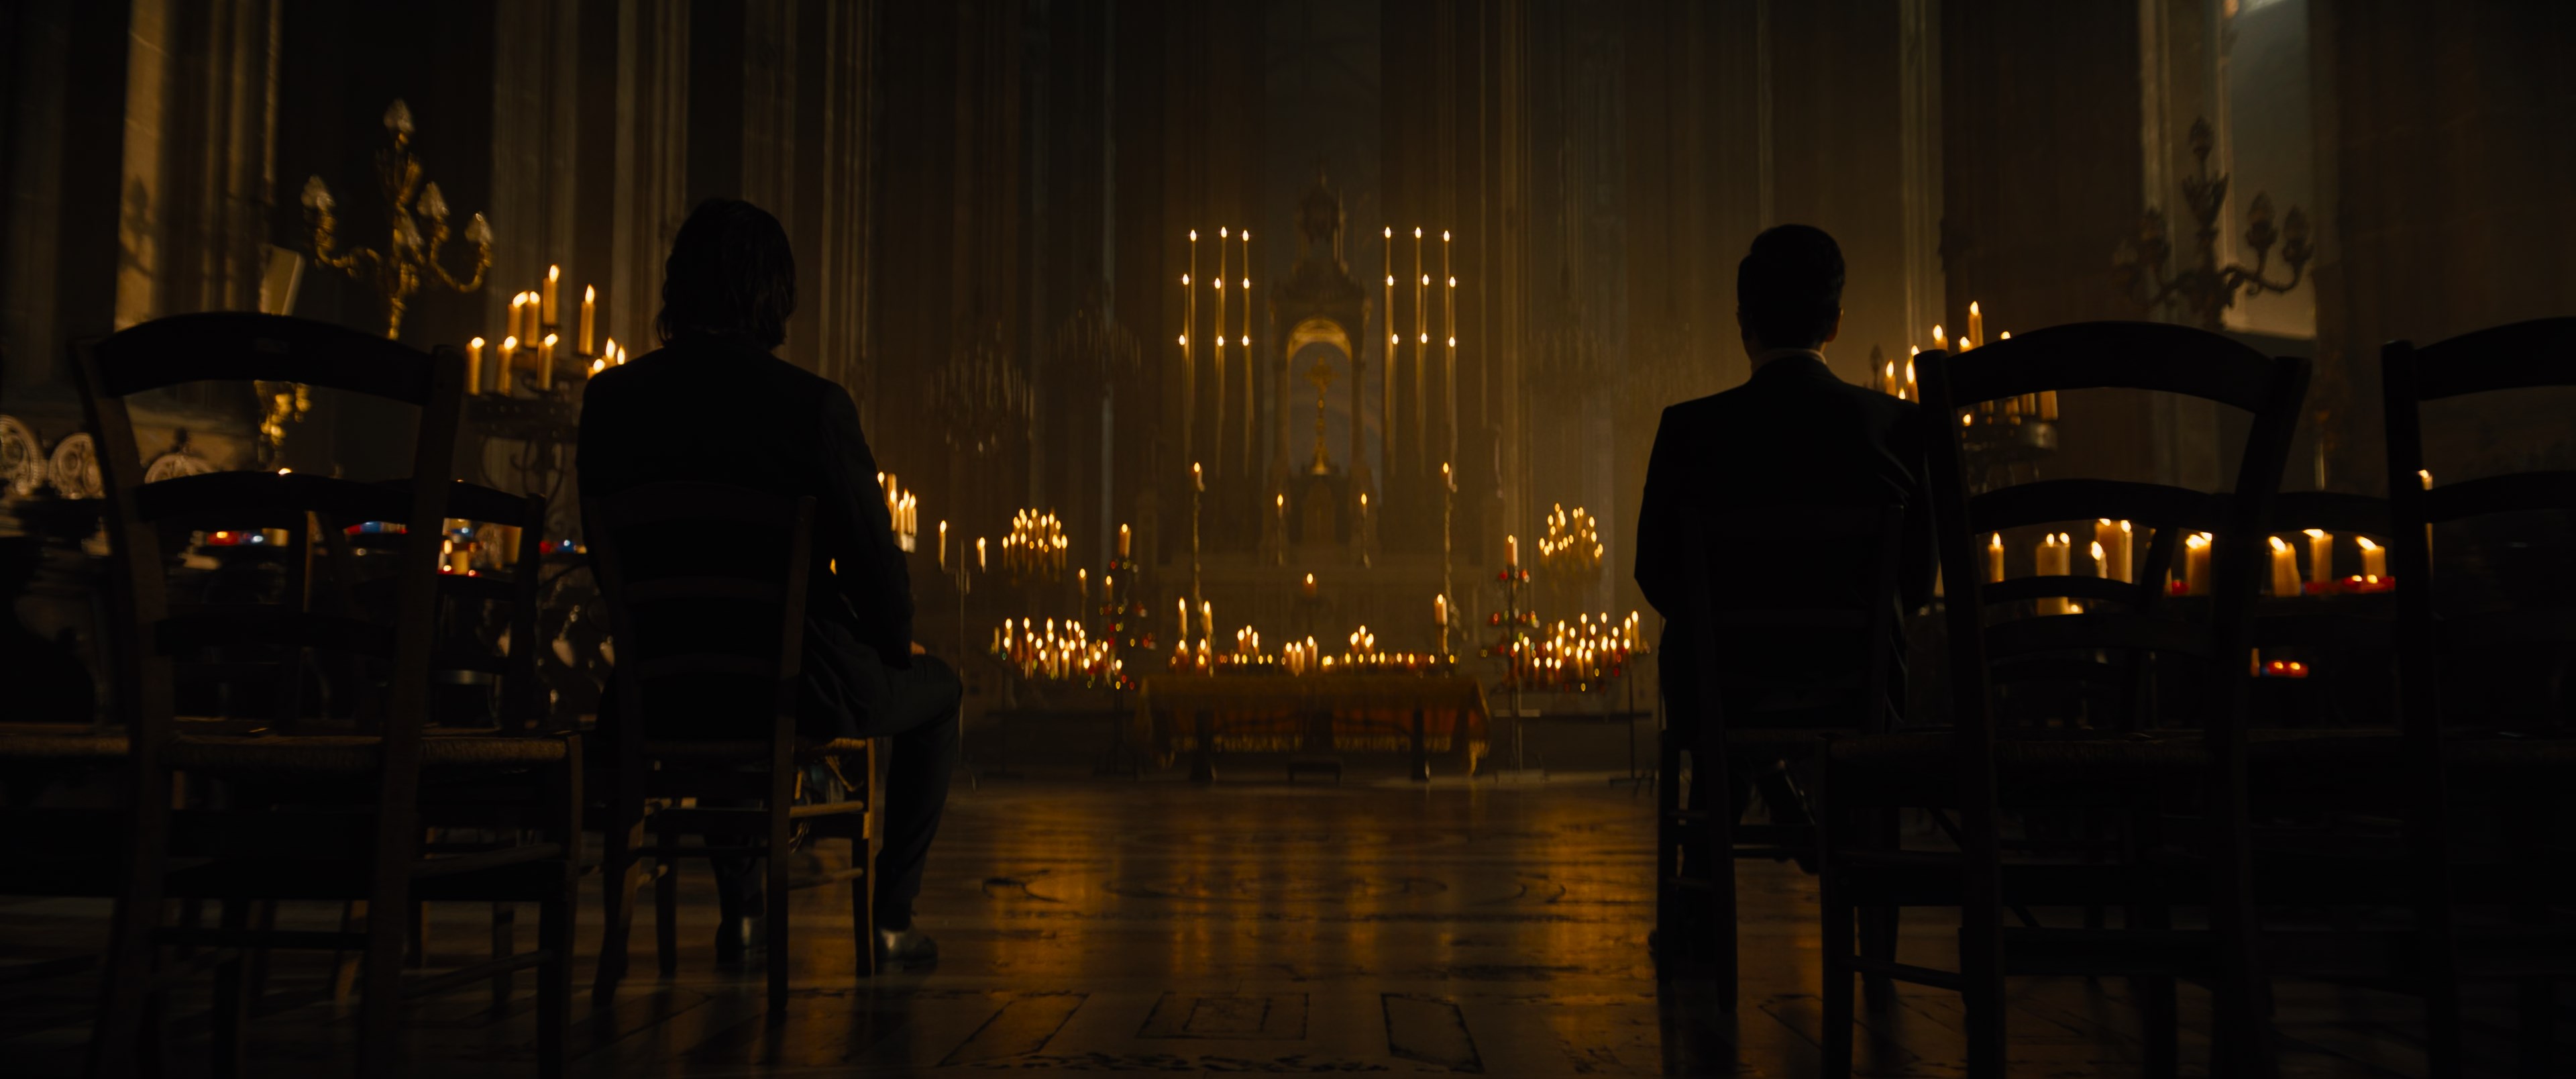 General 3840x1608 John Wick  John Wick Chapter 4 Donnie Yen Keanu Reeves church movies film stills chair candles interior sitting men